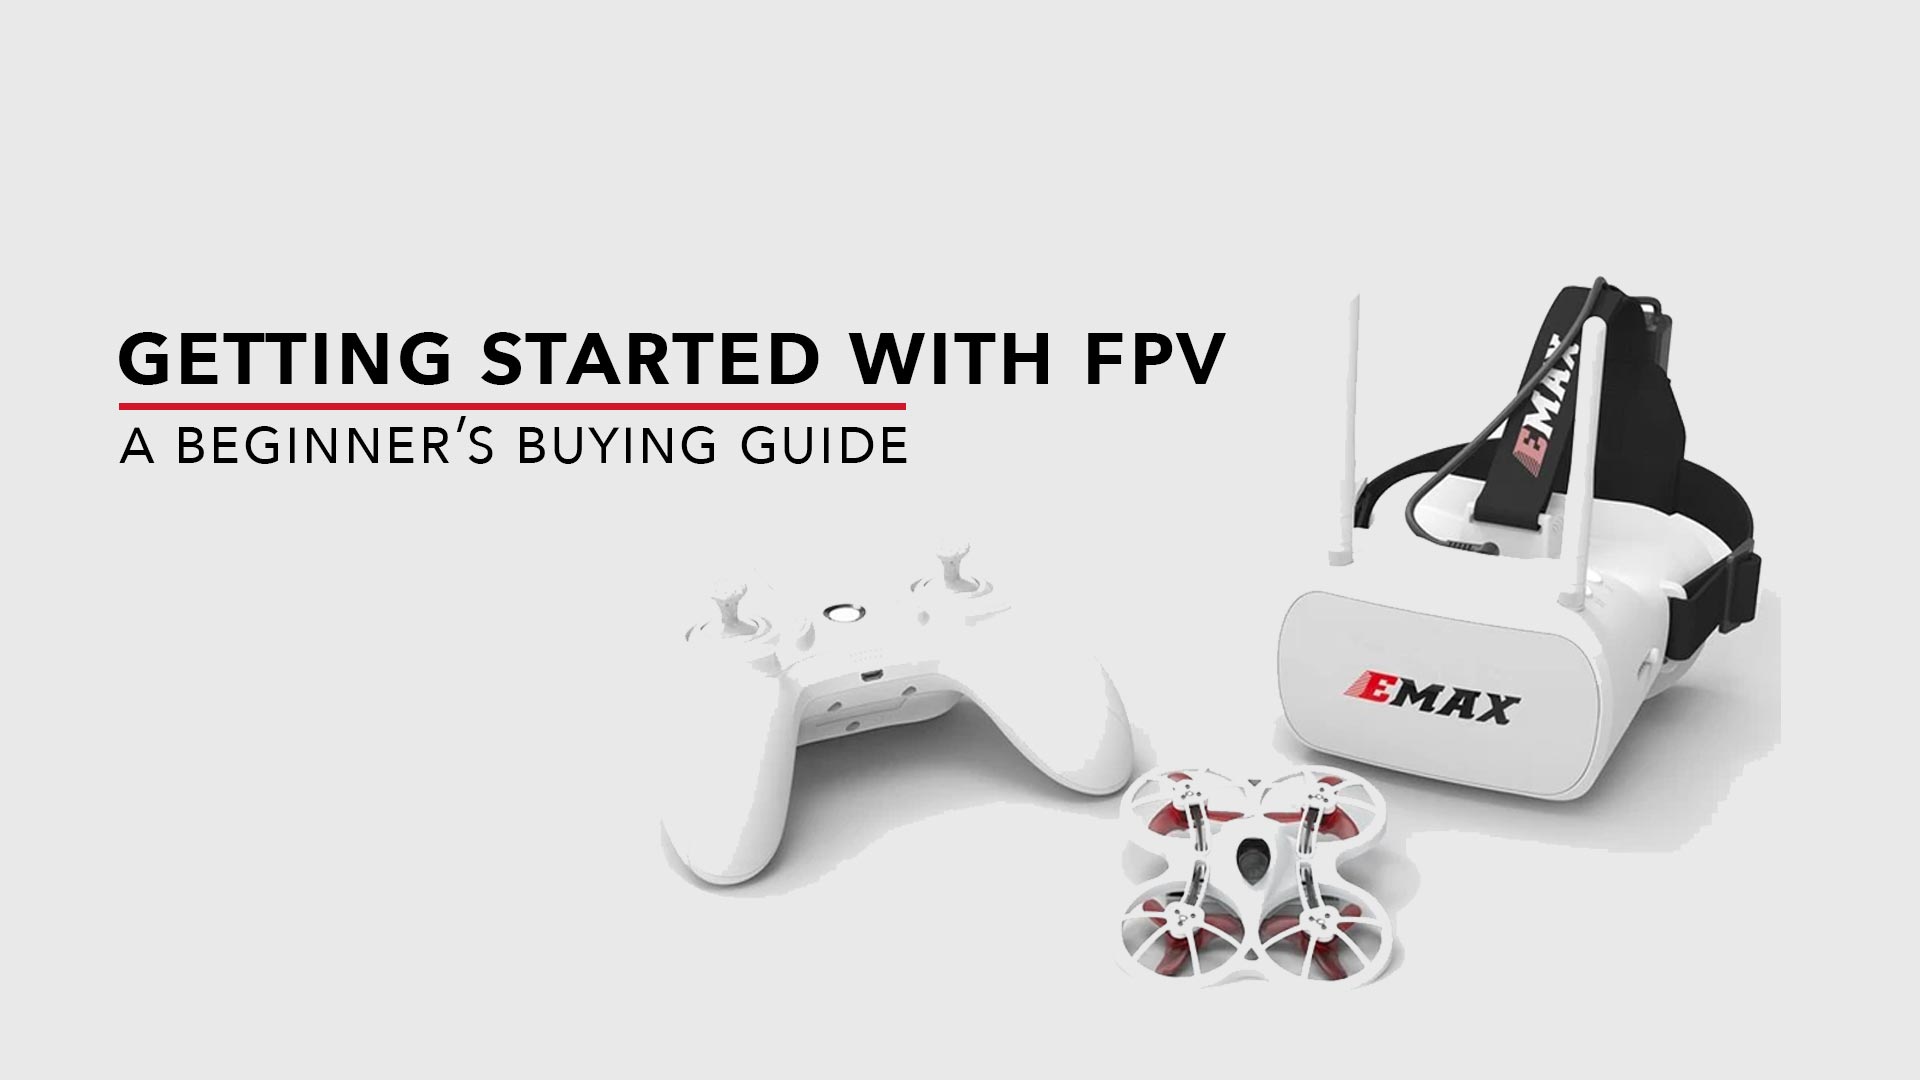 The FPV starter - A beginner friendly drone